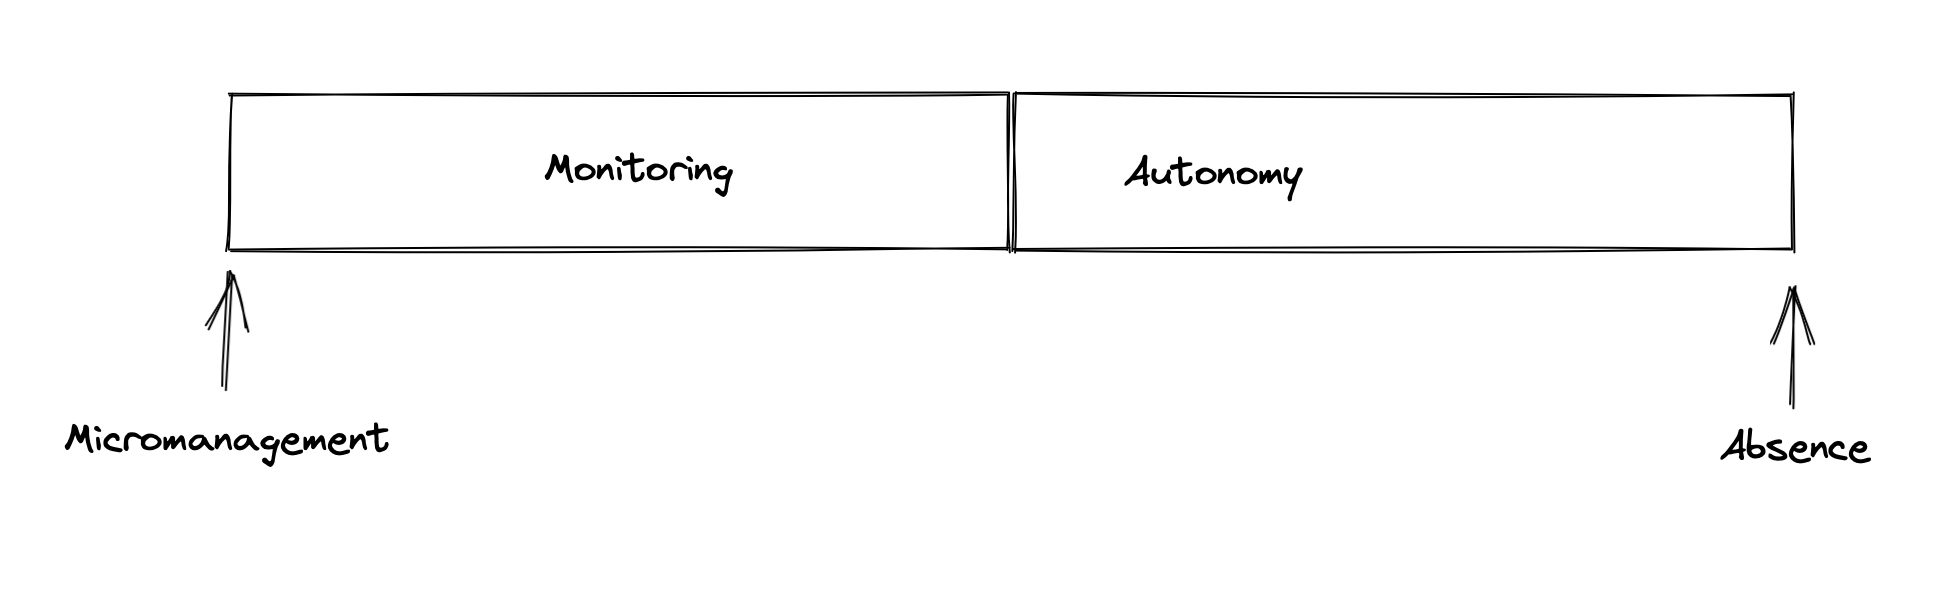 monitoring_autonomy